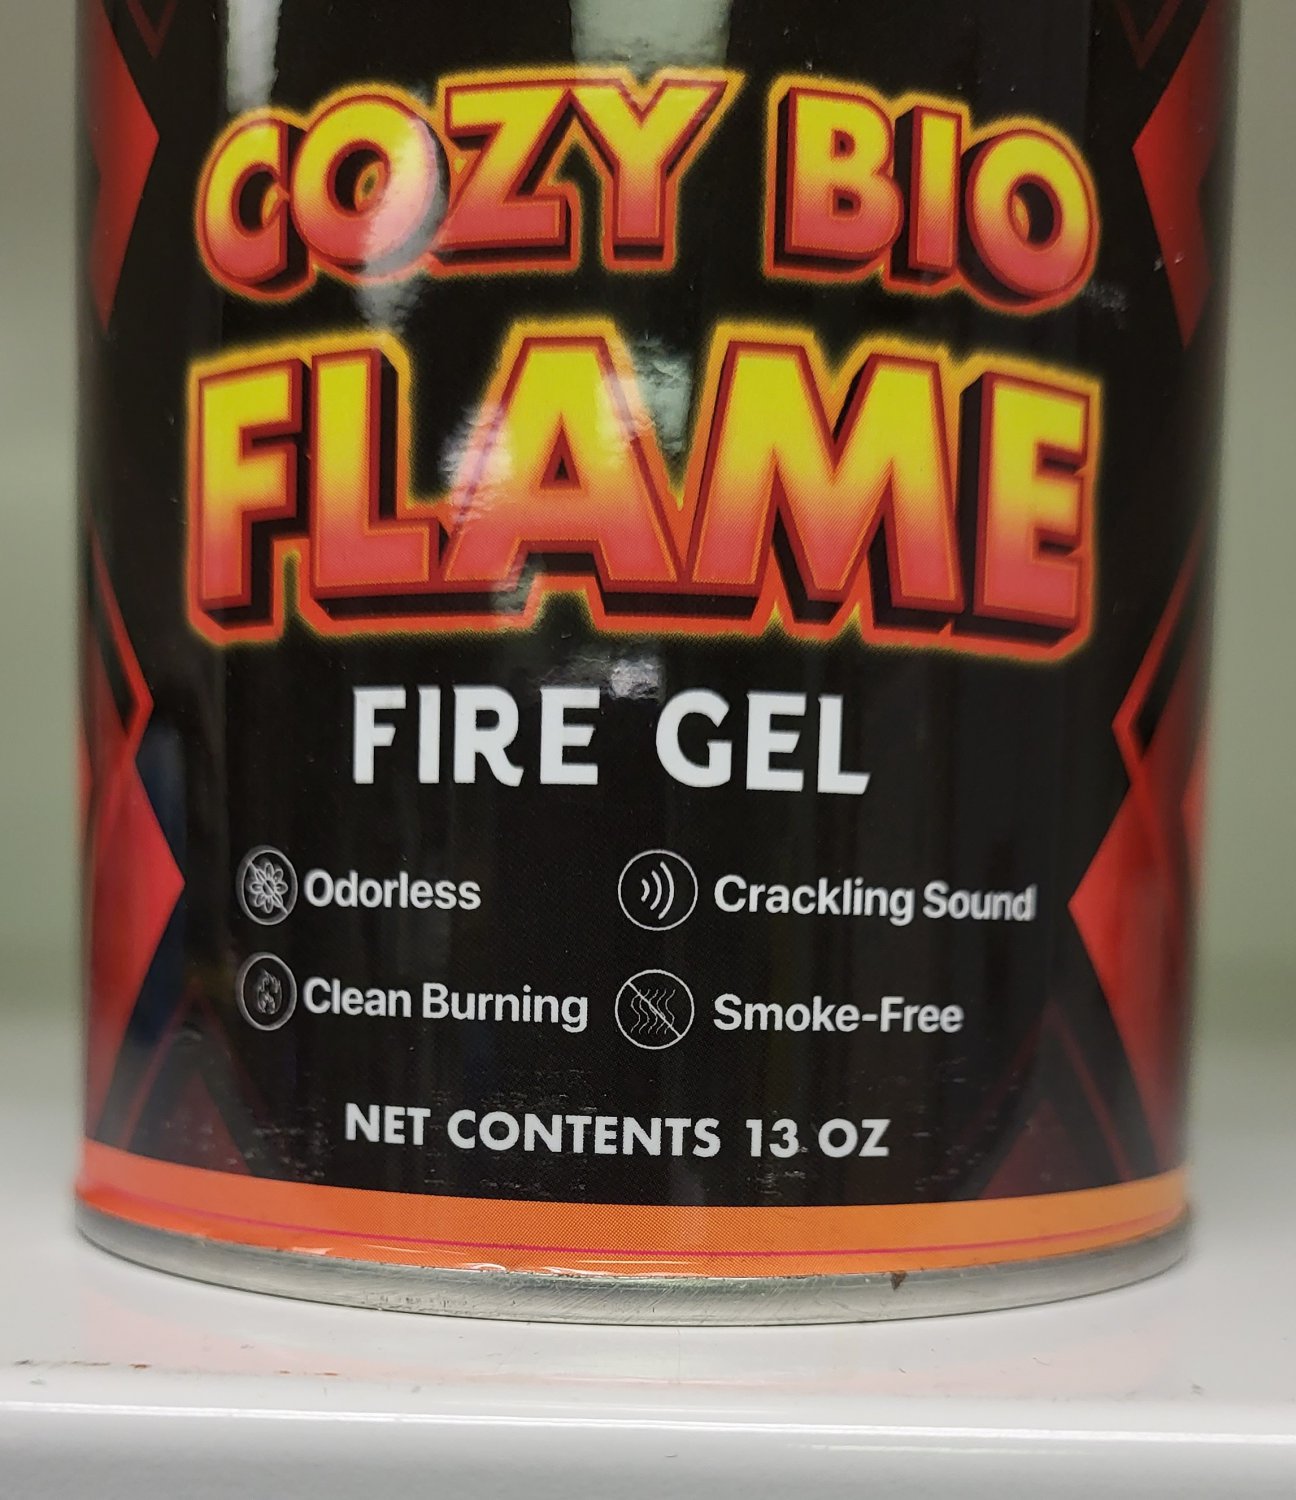 13oz Fire Gel in a can